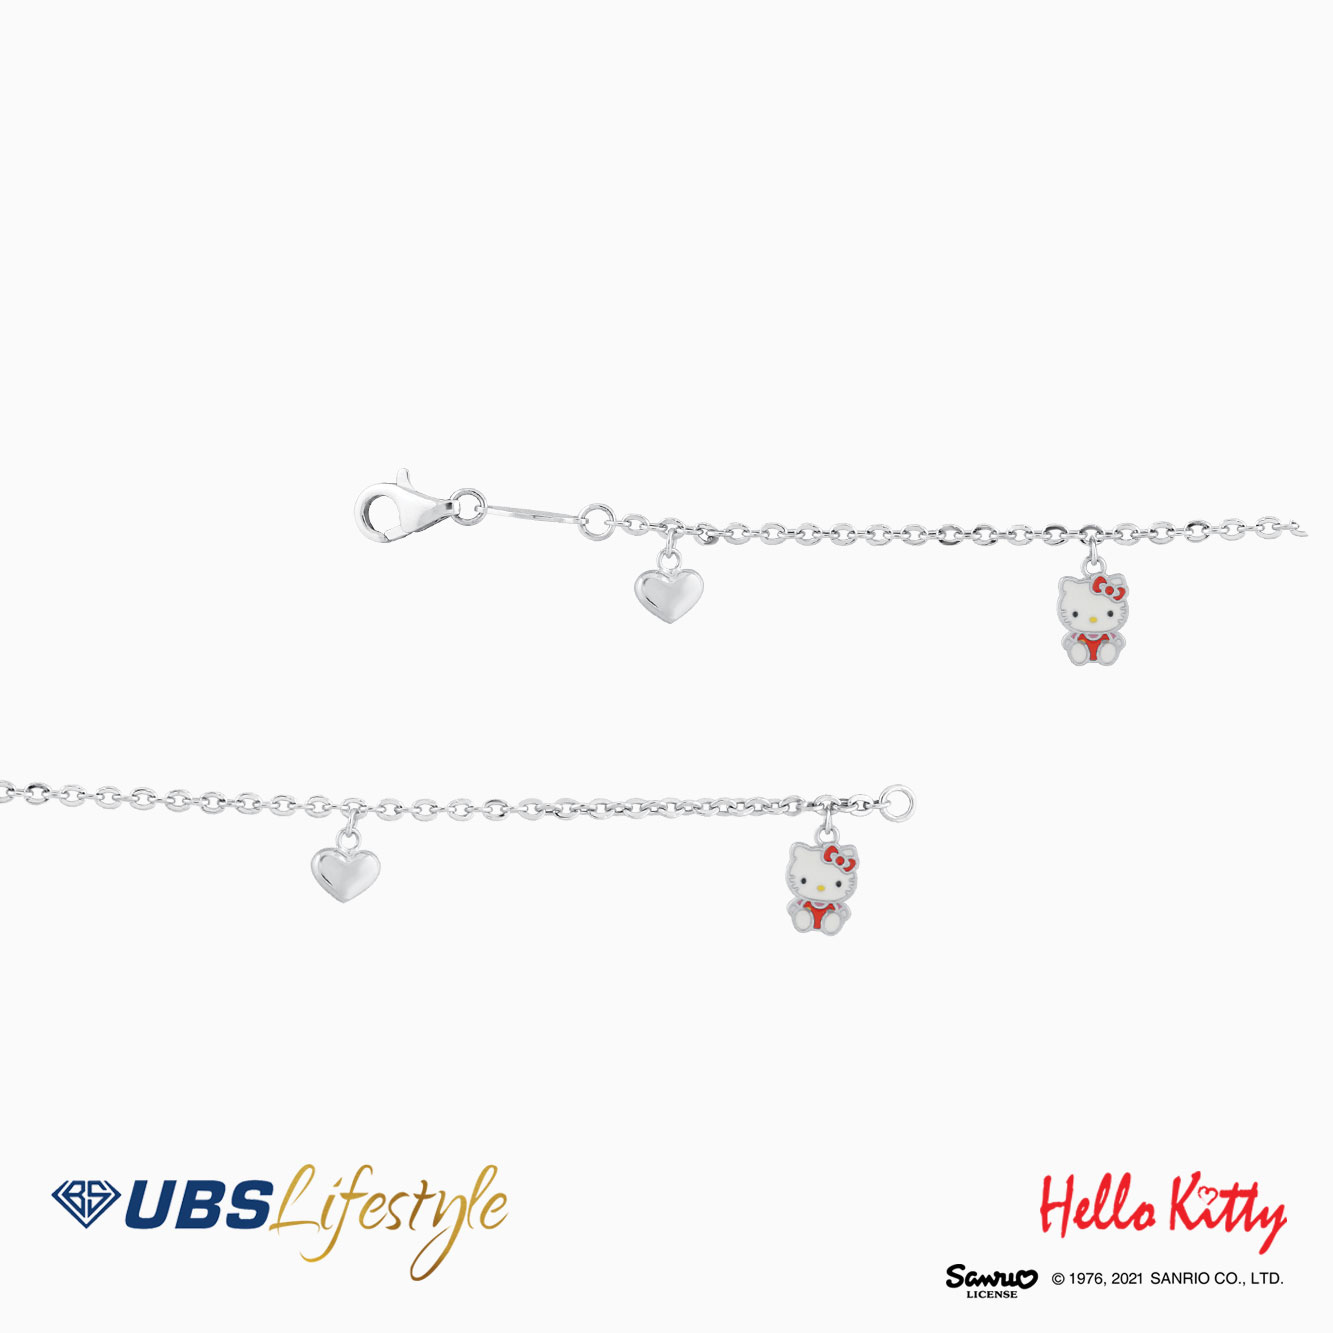 UBS Gelang Emas Anak Sanrio Hello Kitty - Hgz0046 - 17K